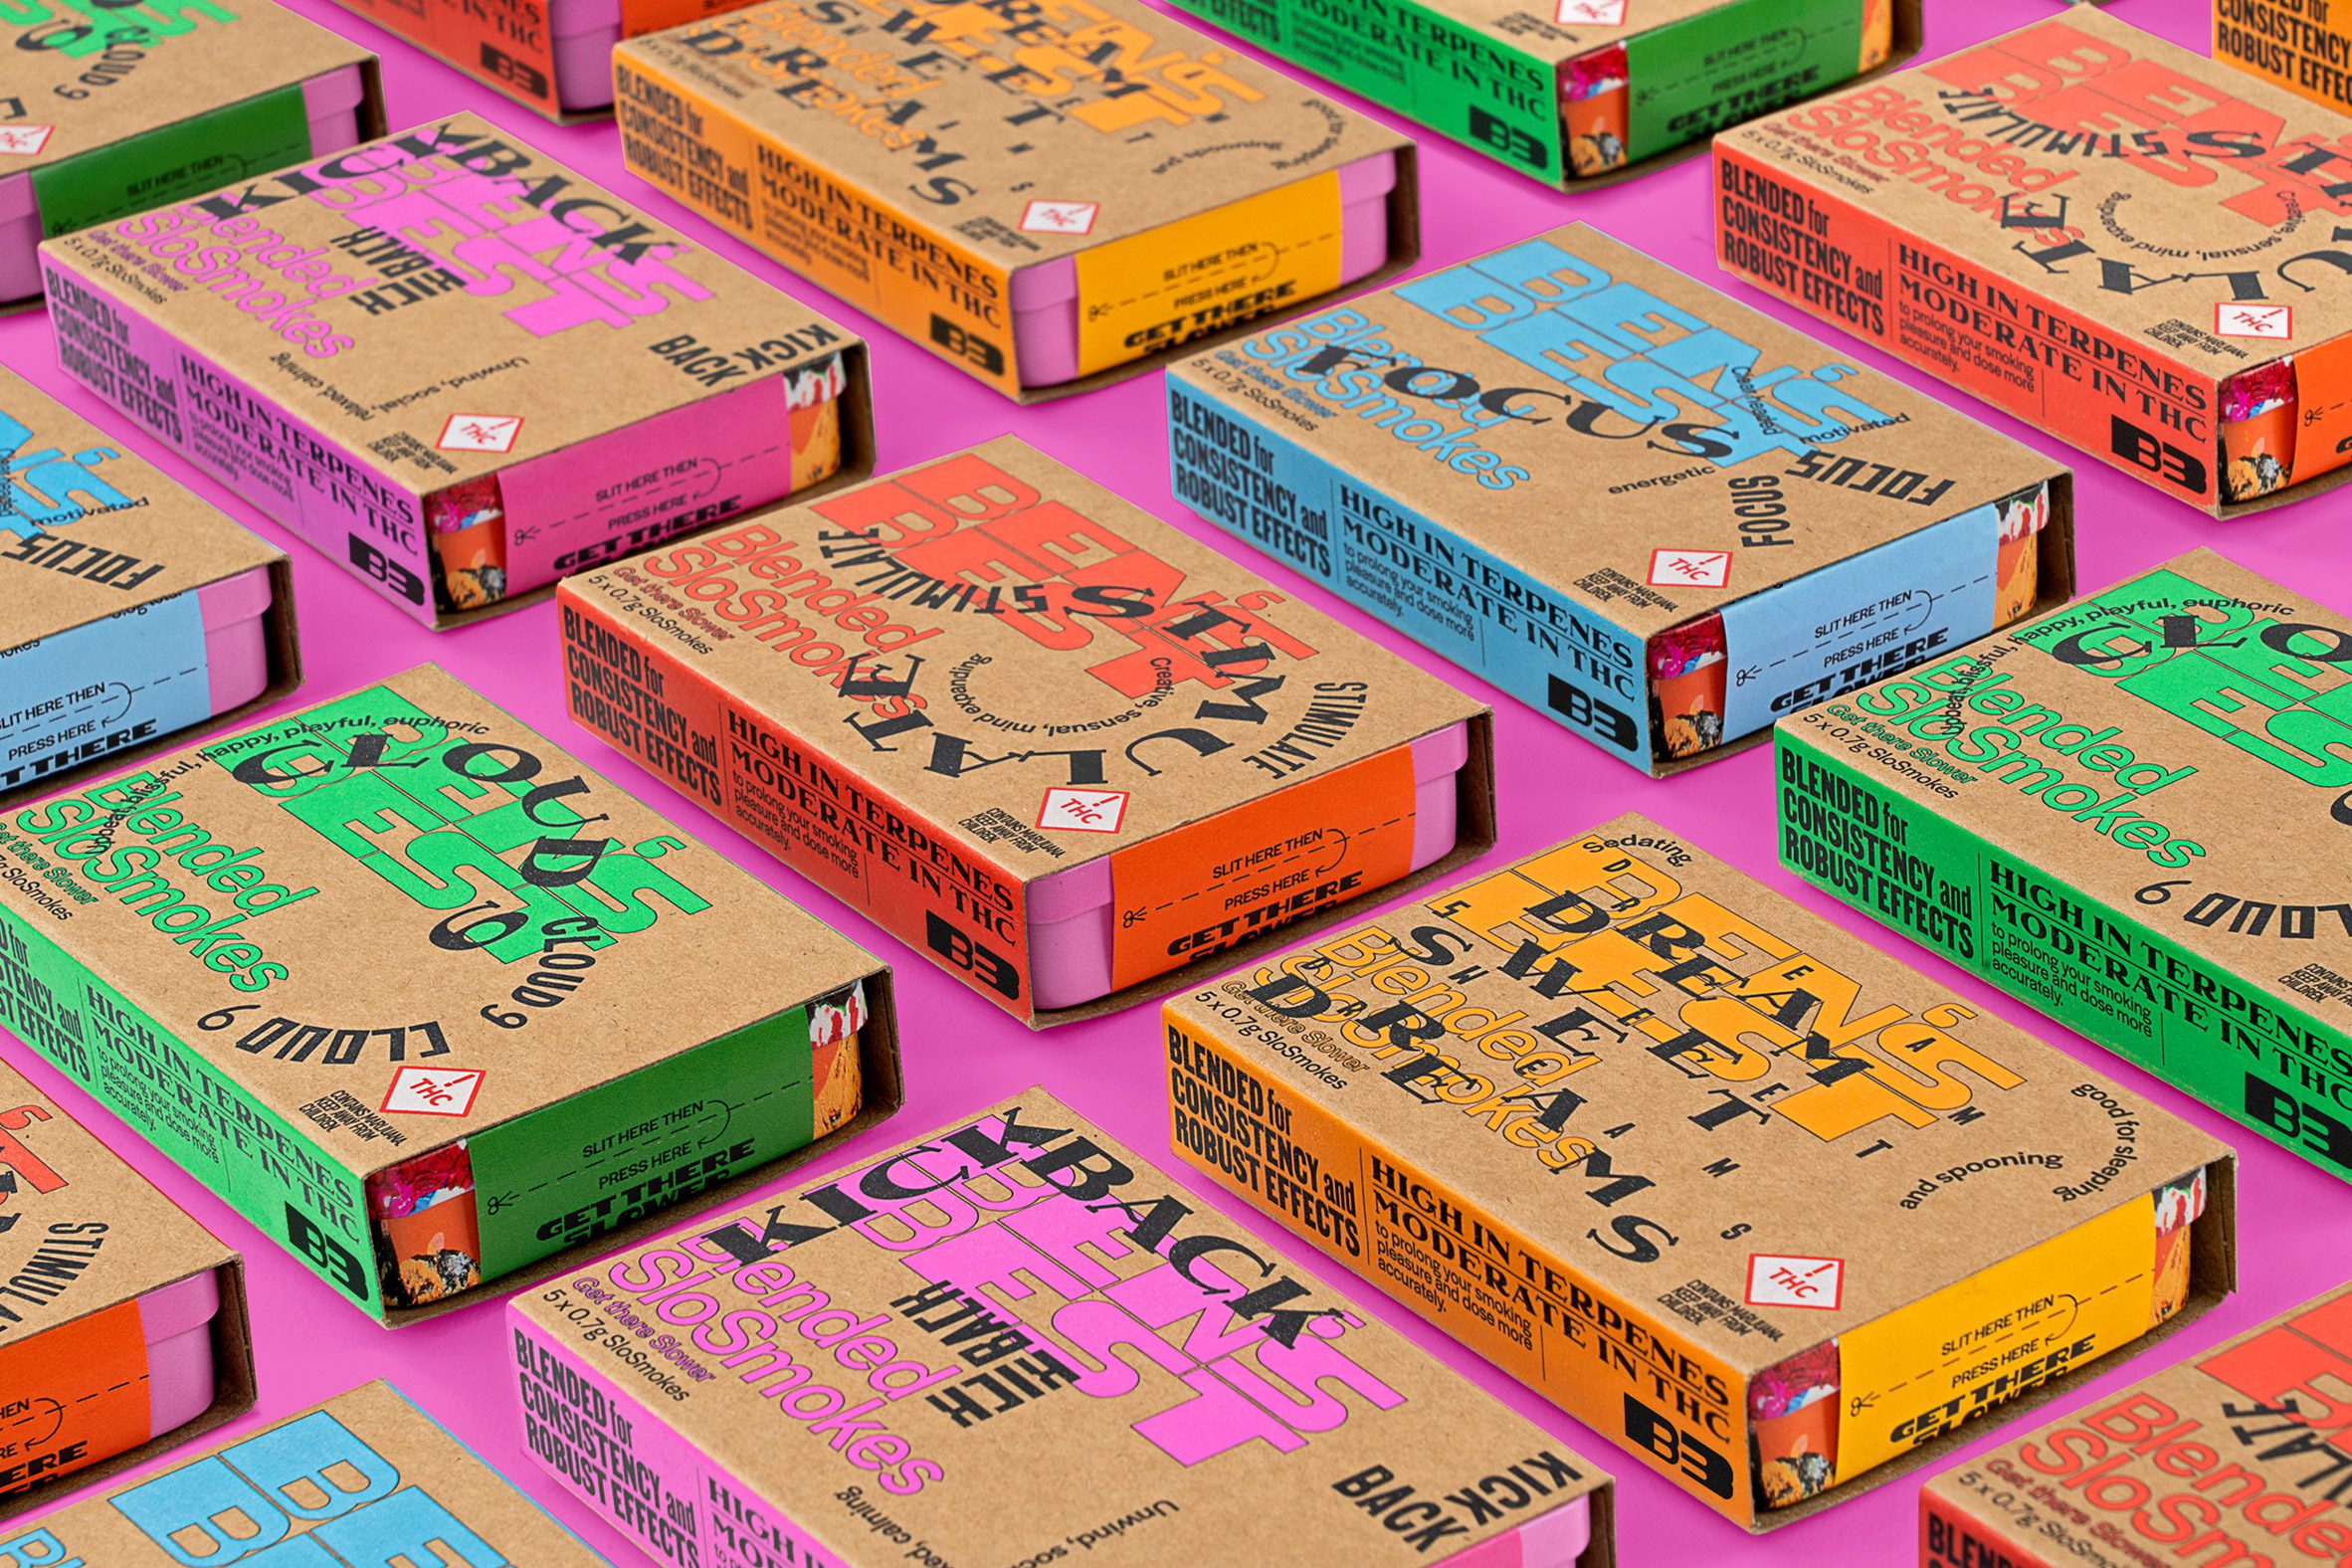 Ben's Best Blnz cardboard boxes arranged on pink background